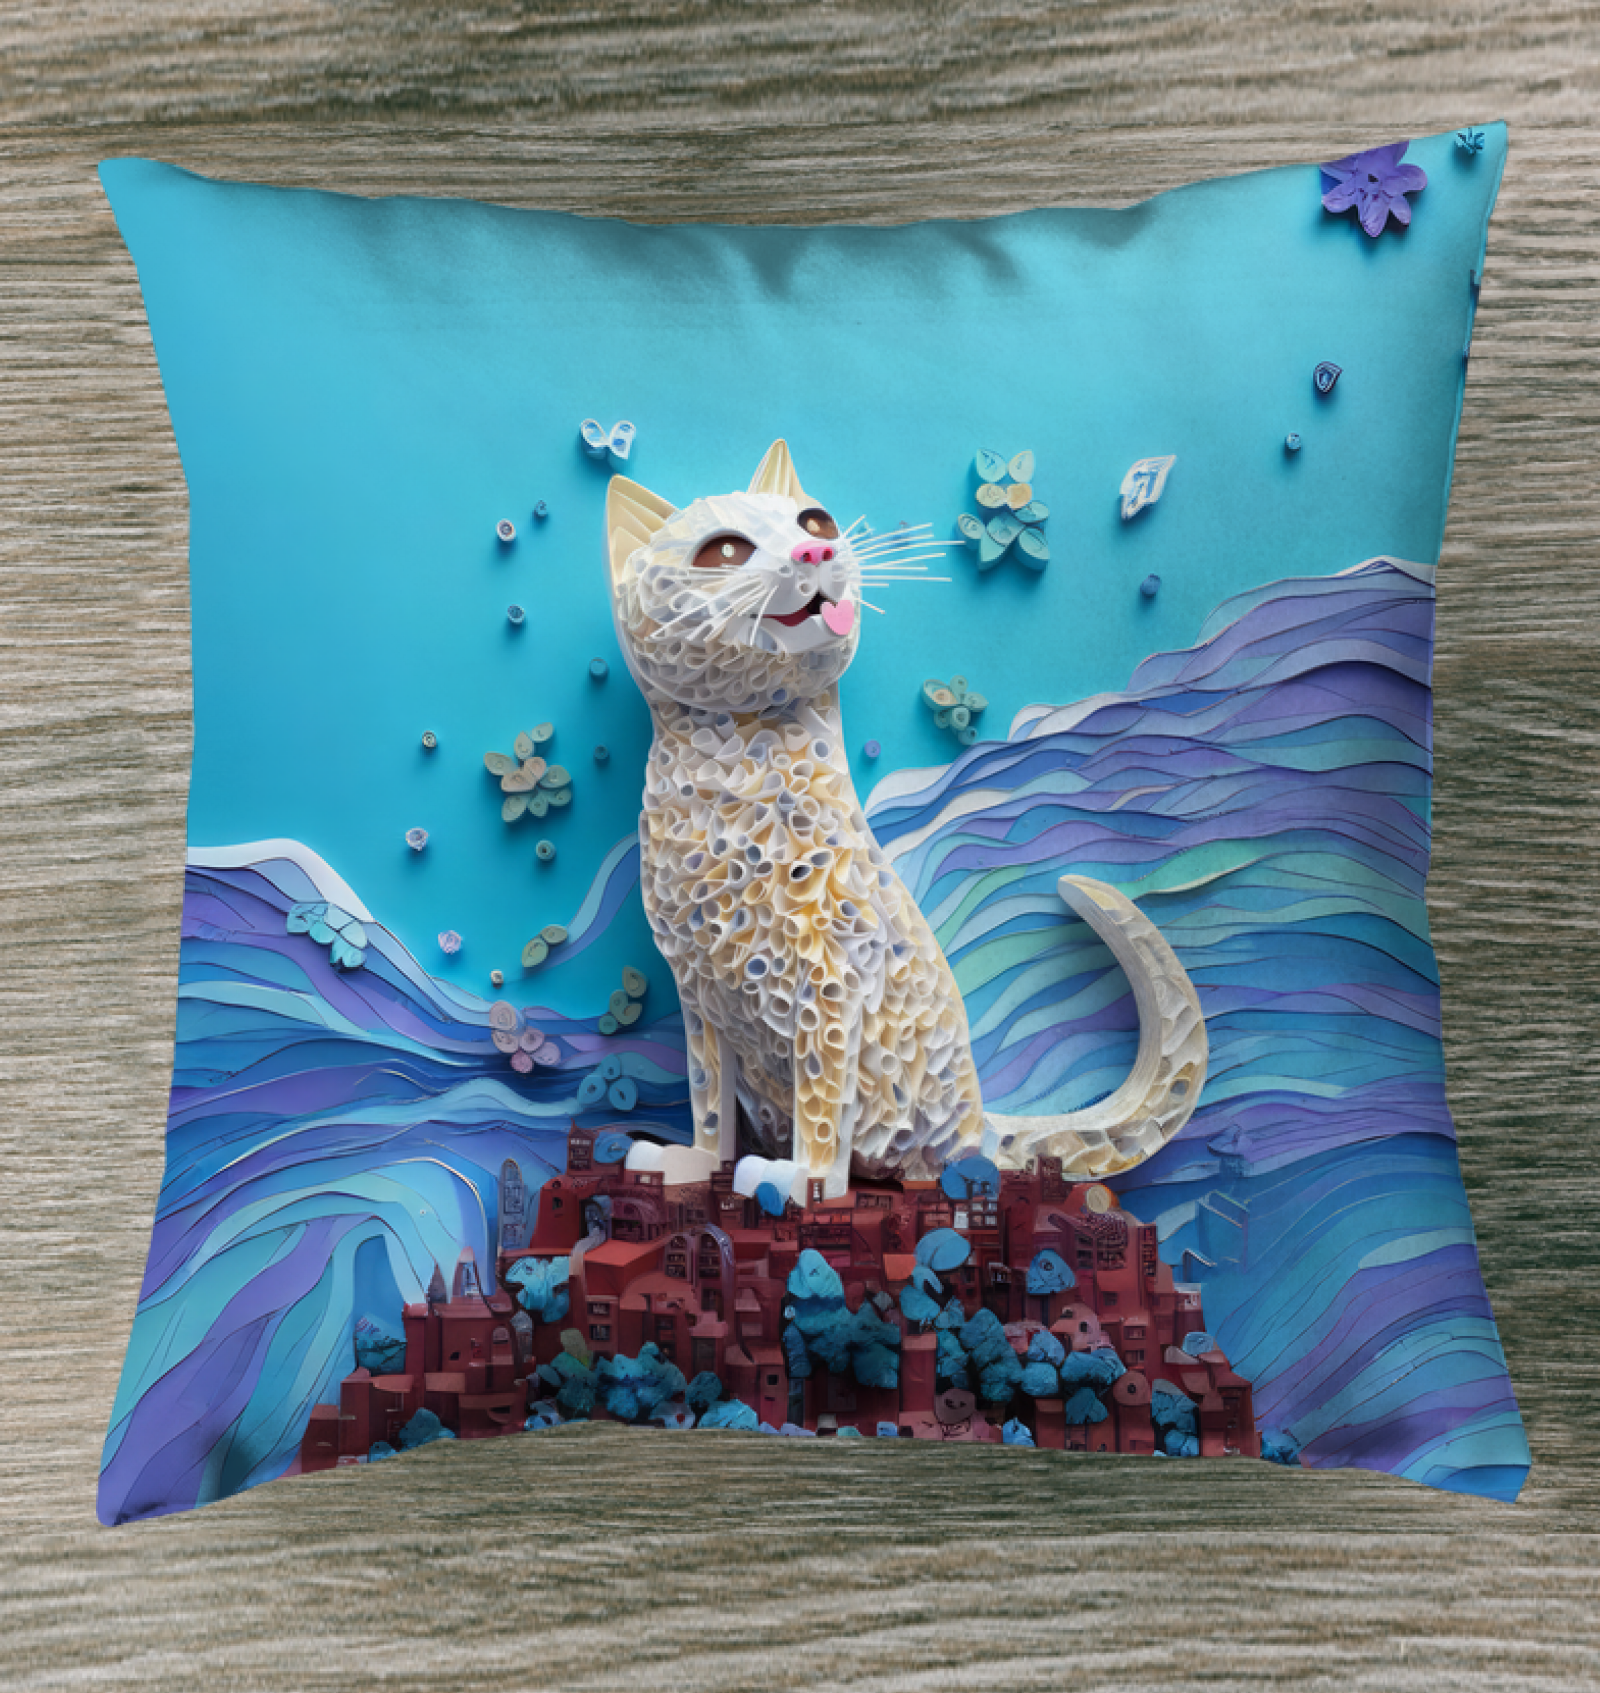 Cozy indoor pillow featuring mystic Kirigami owl artwork.